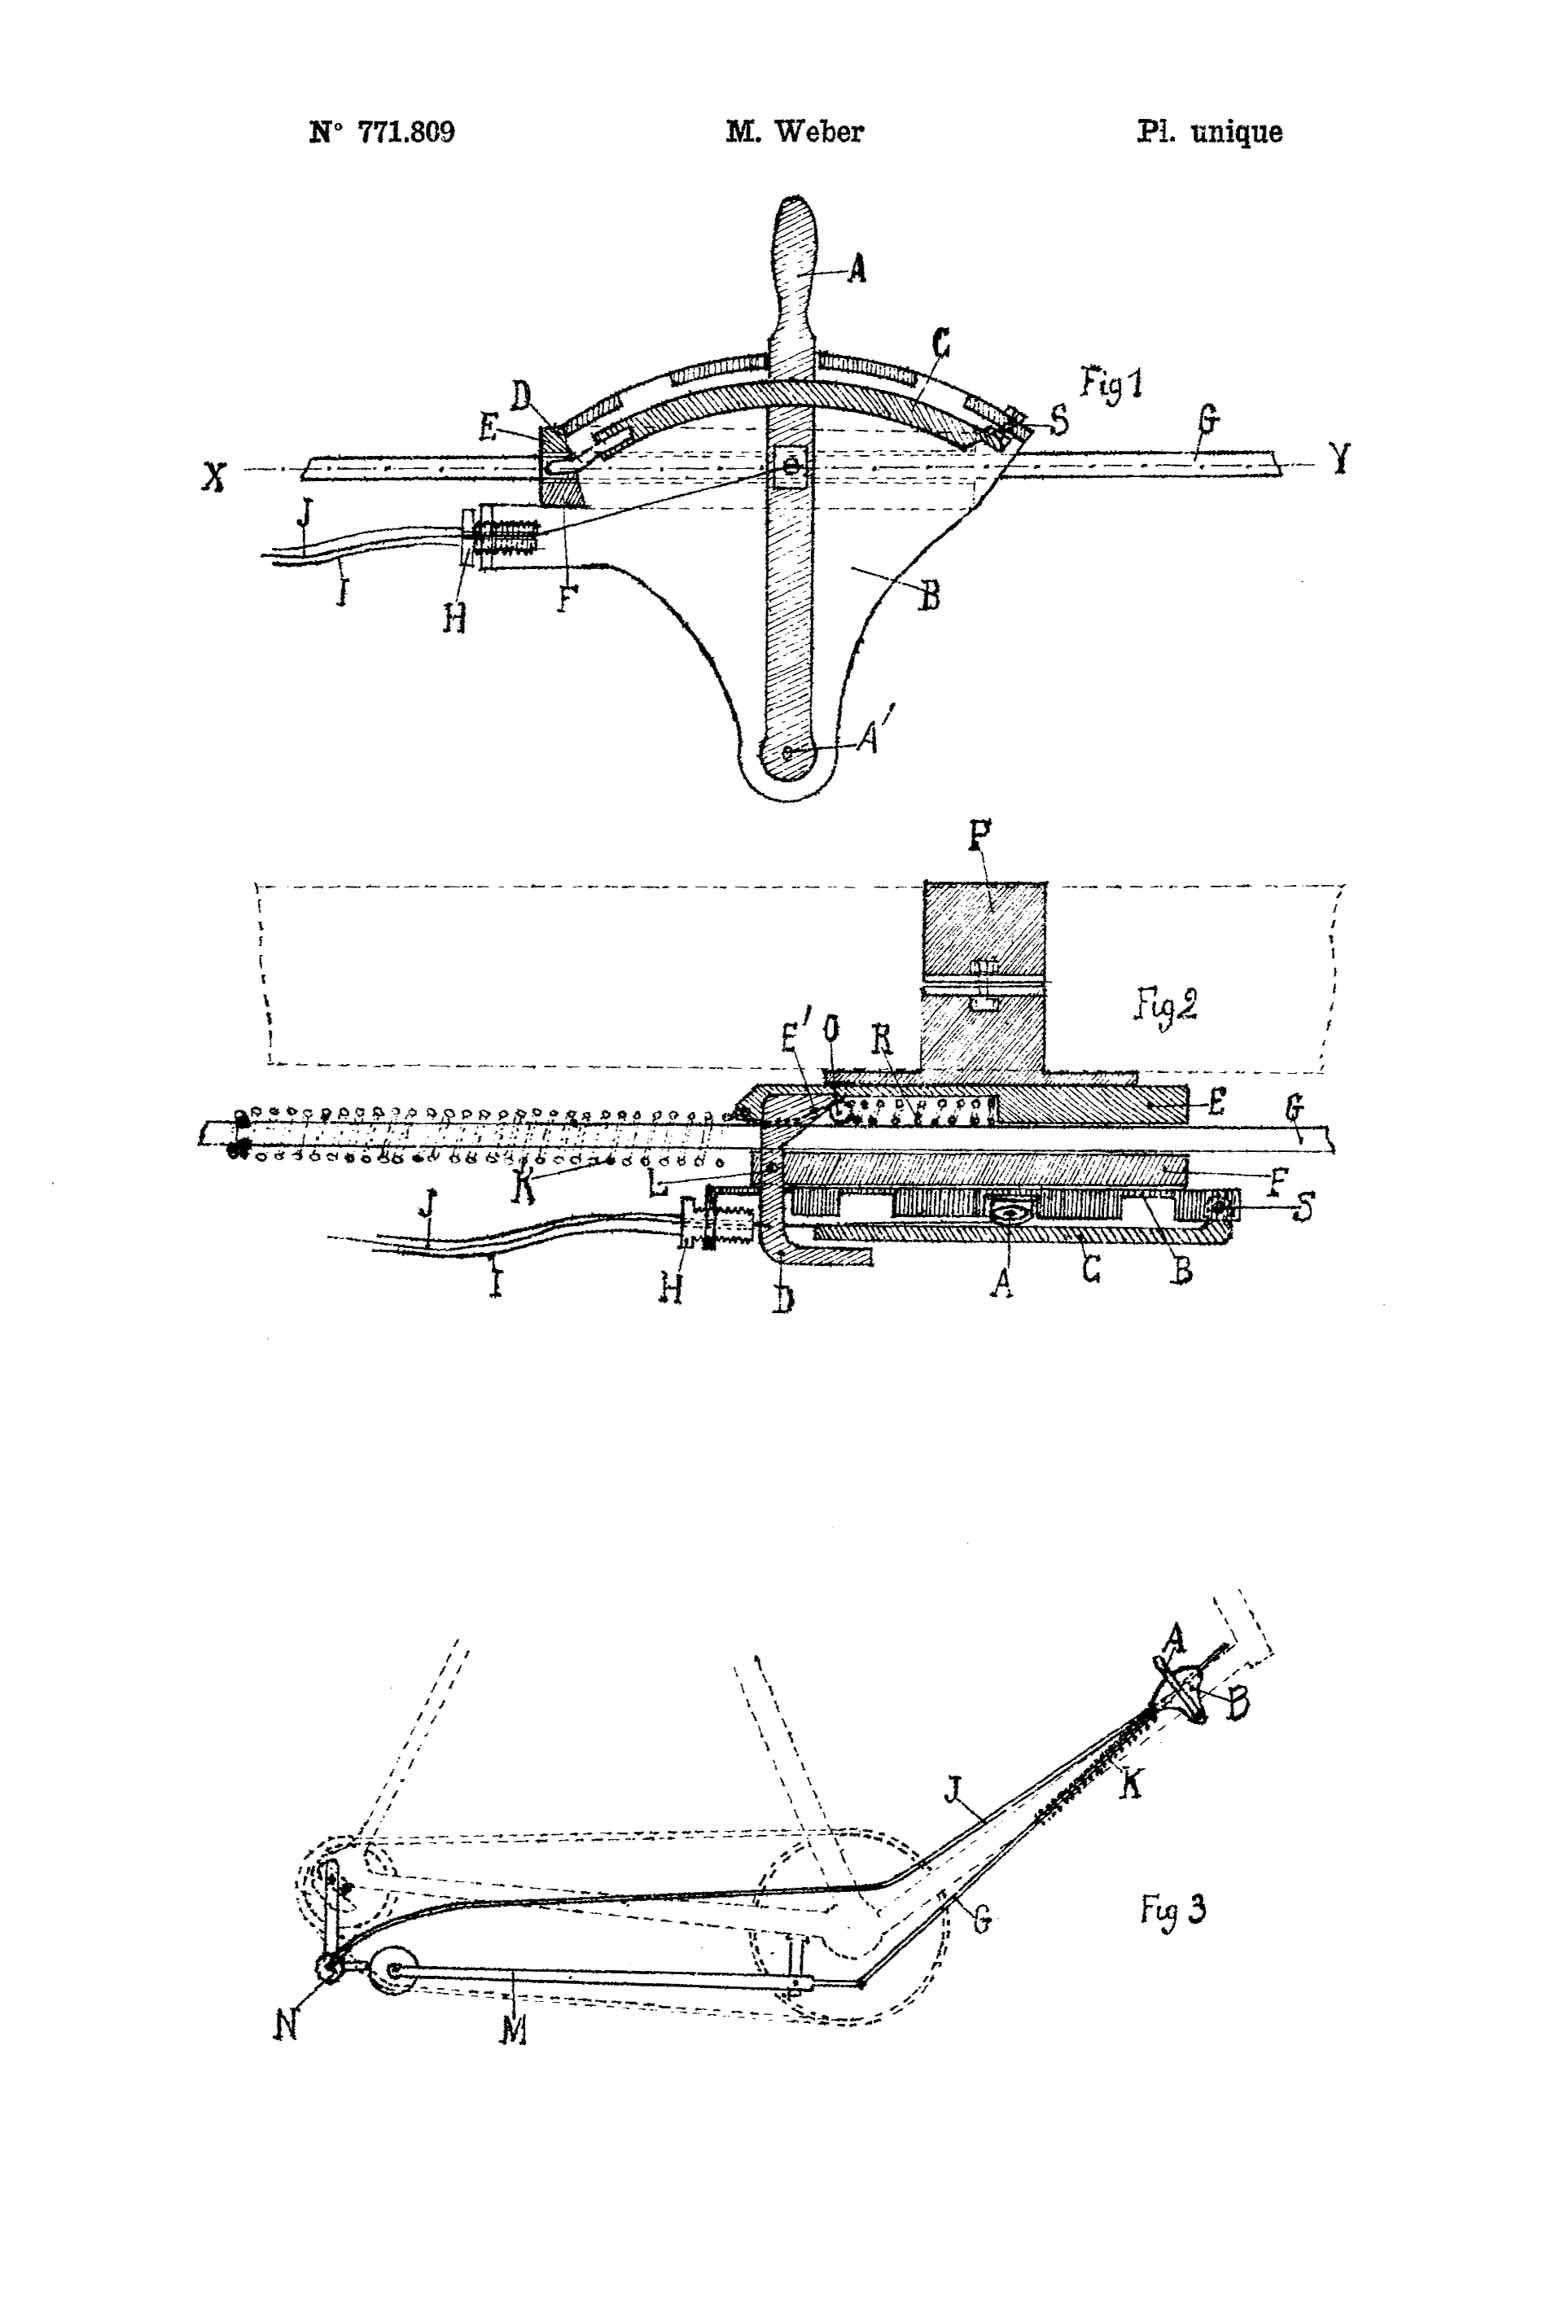 French Patent 771,809 - EWA scan 03 main image